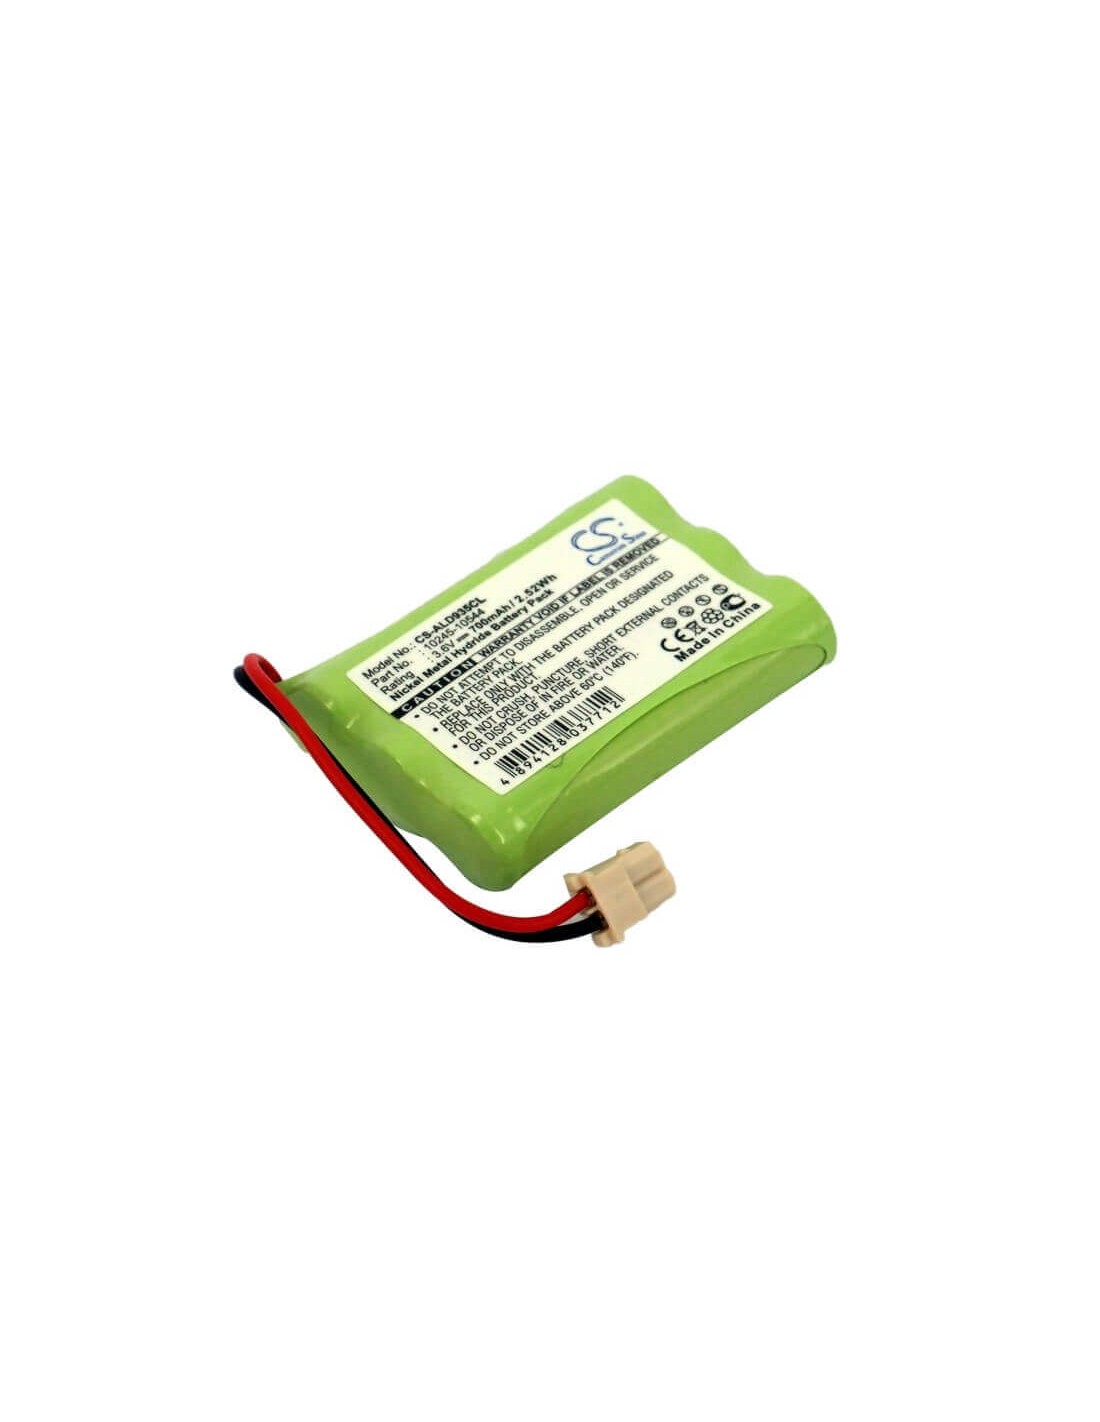 Battery for Audioline, Cdl935g 3.6V, 700mAh - 2.52Wh